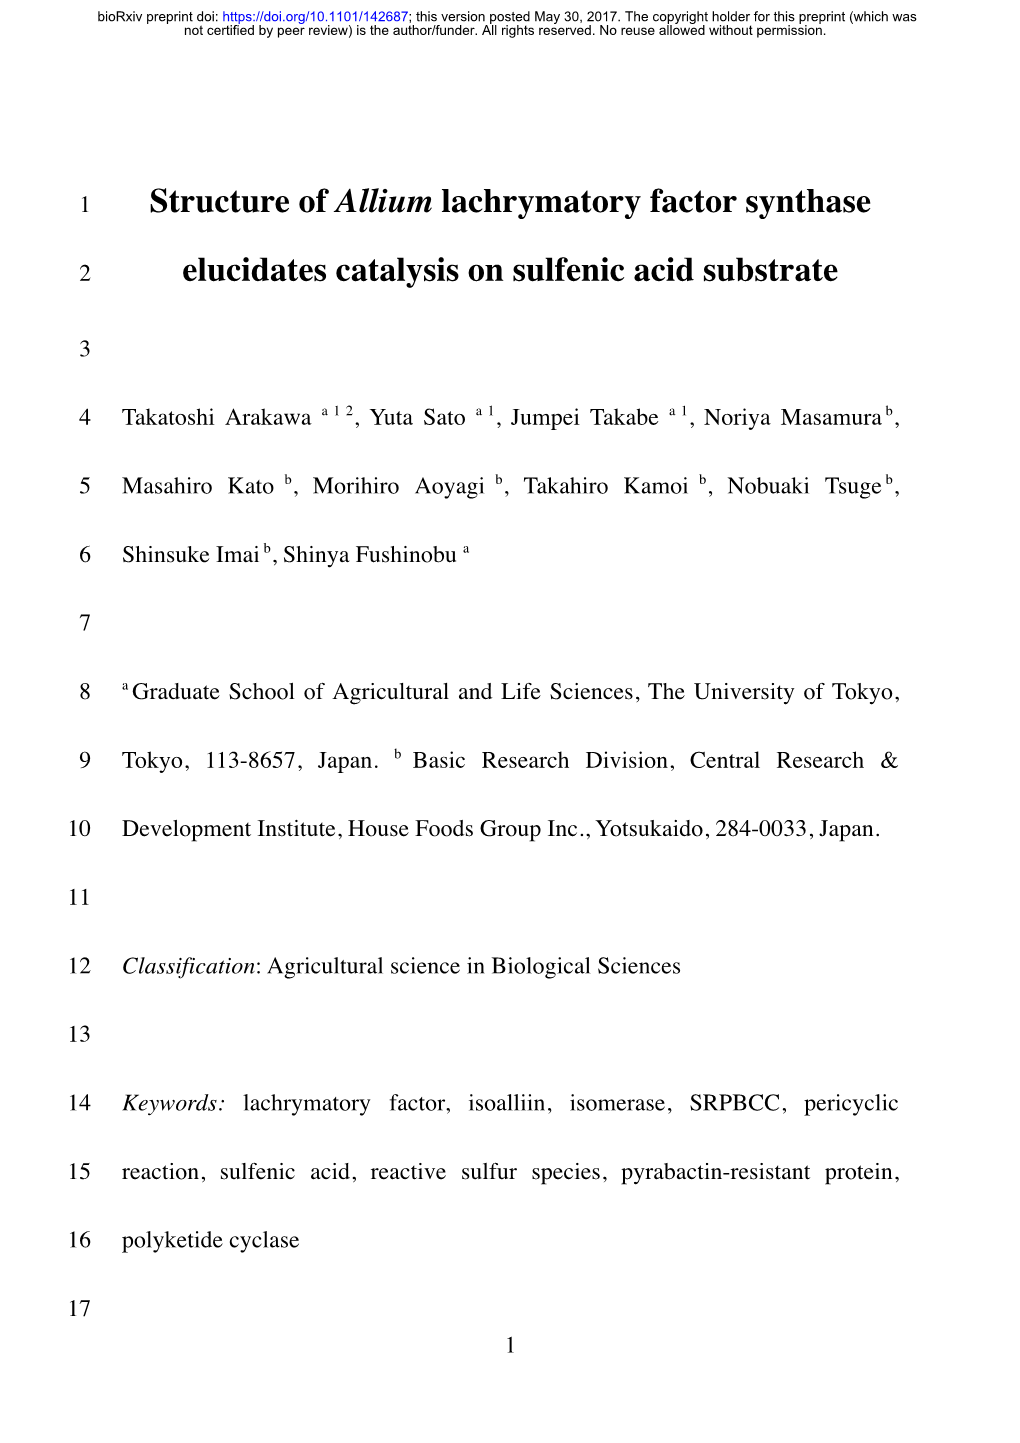 Structure of Allium Lachrymatory Factor Synthase Elucidates Catalysis On